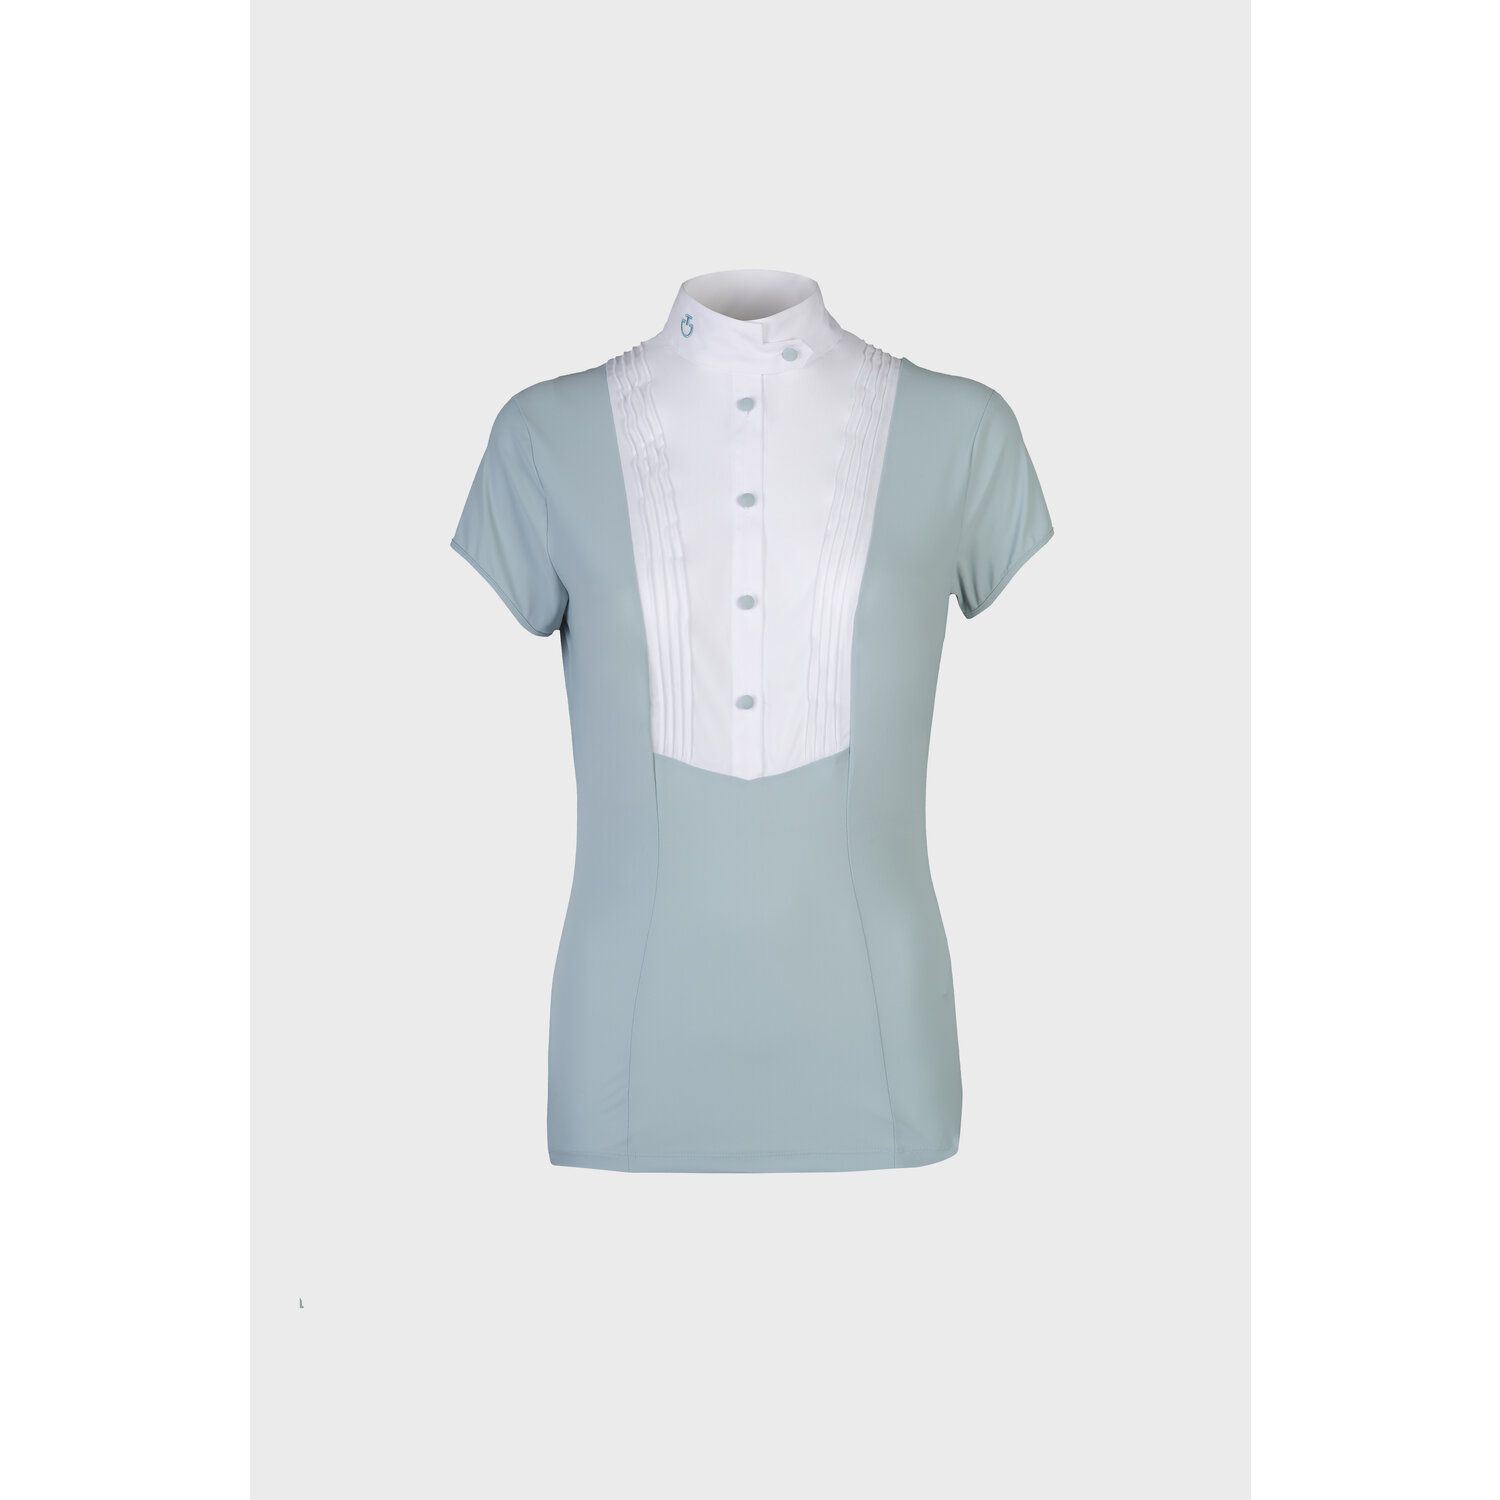 Cavalleria Toscana Women's short-sleeved competition shirt LIGHT BLUE-1